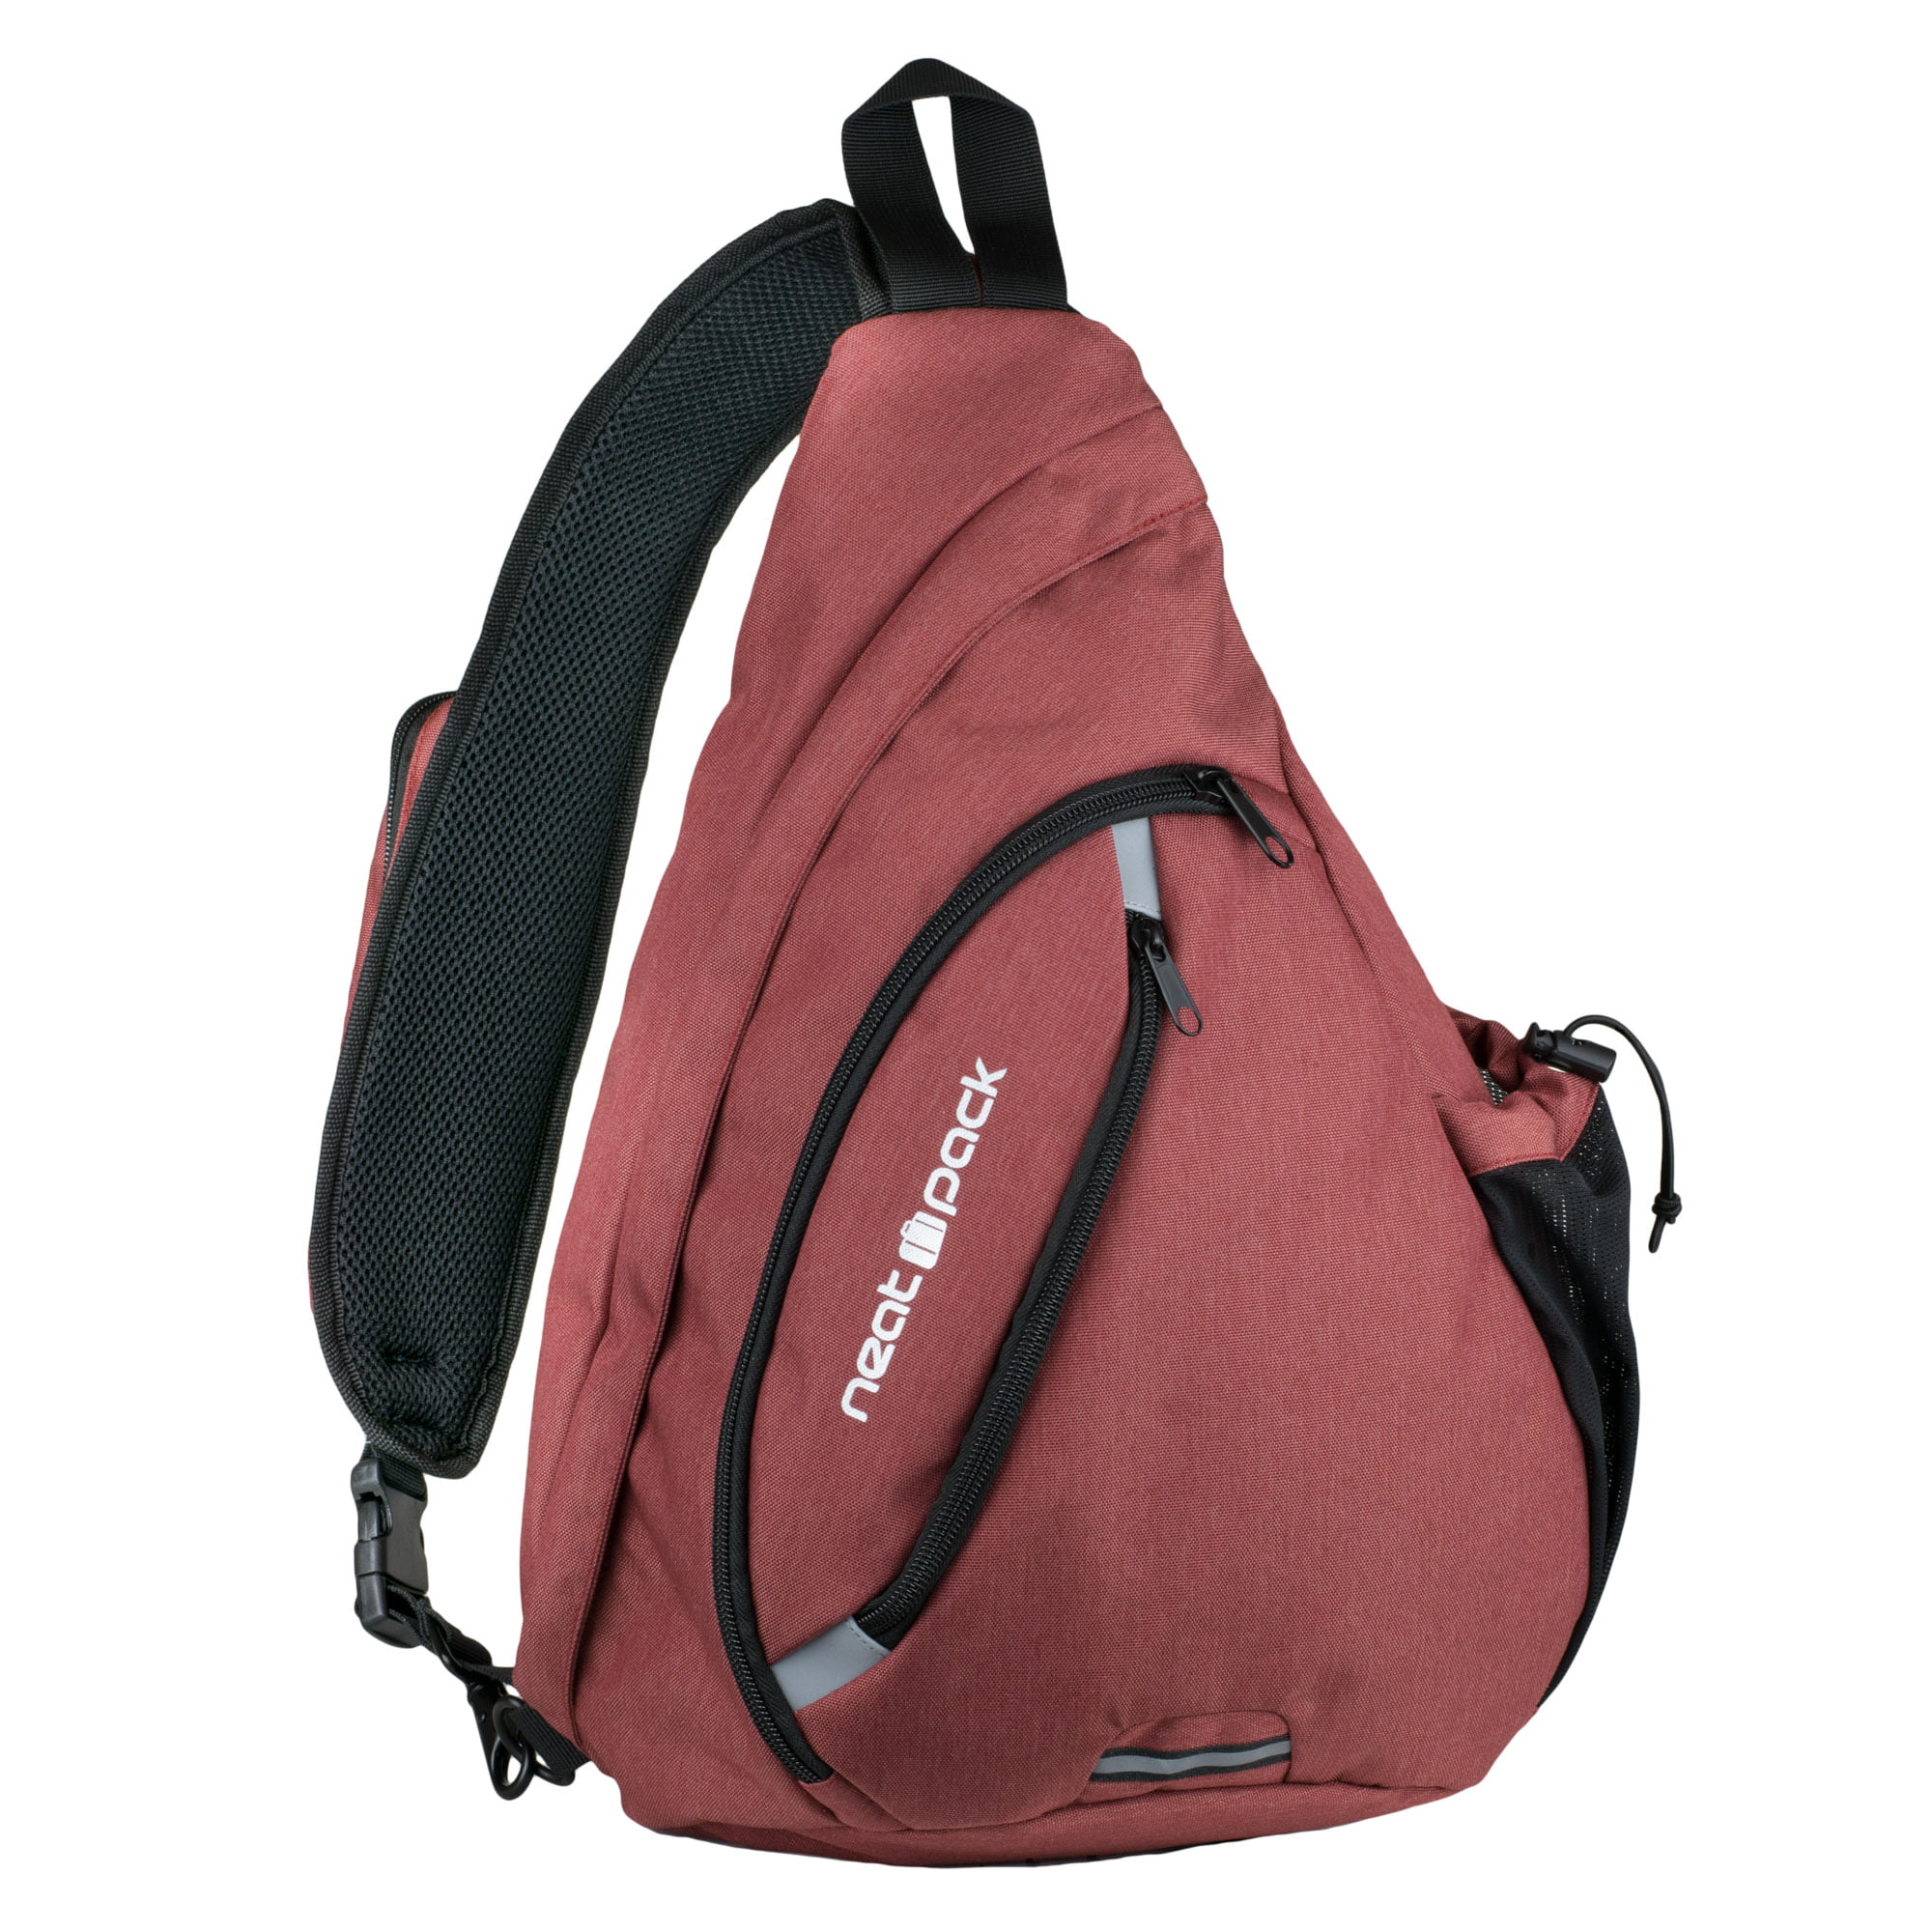 Versatile Canvas Sling Bag/Urban Travel Backpack Grey Wear Over Shoulder or Crossbody for Men & Women by NeatPack 